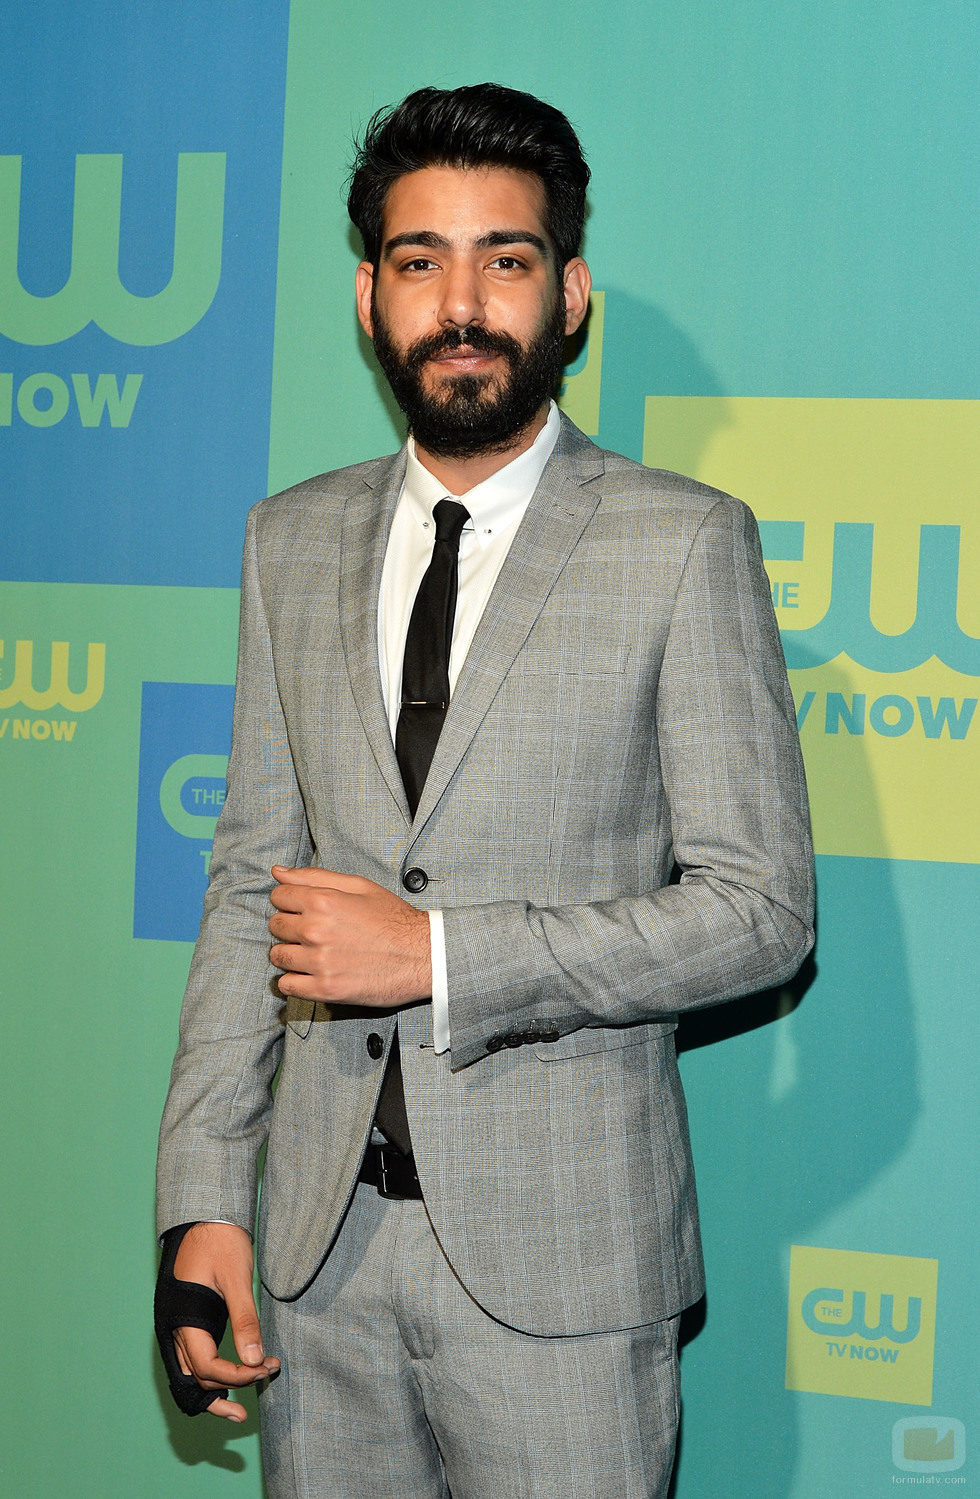 Rahul Kohli en los Upfronts 2014 de The CW